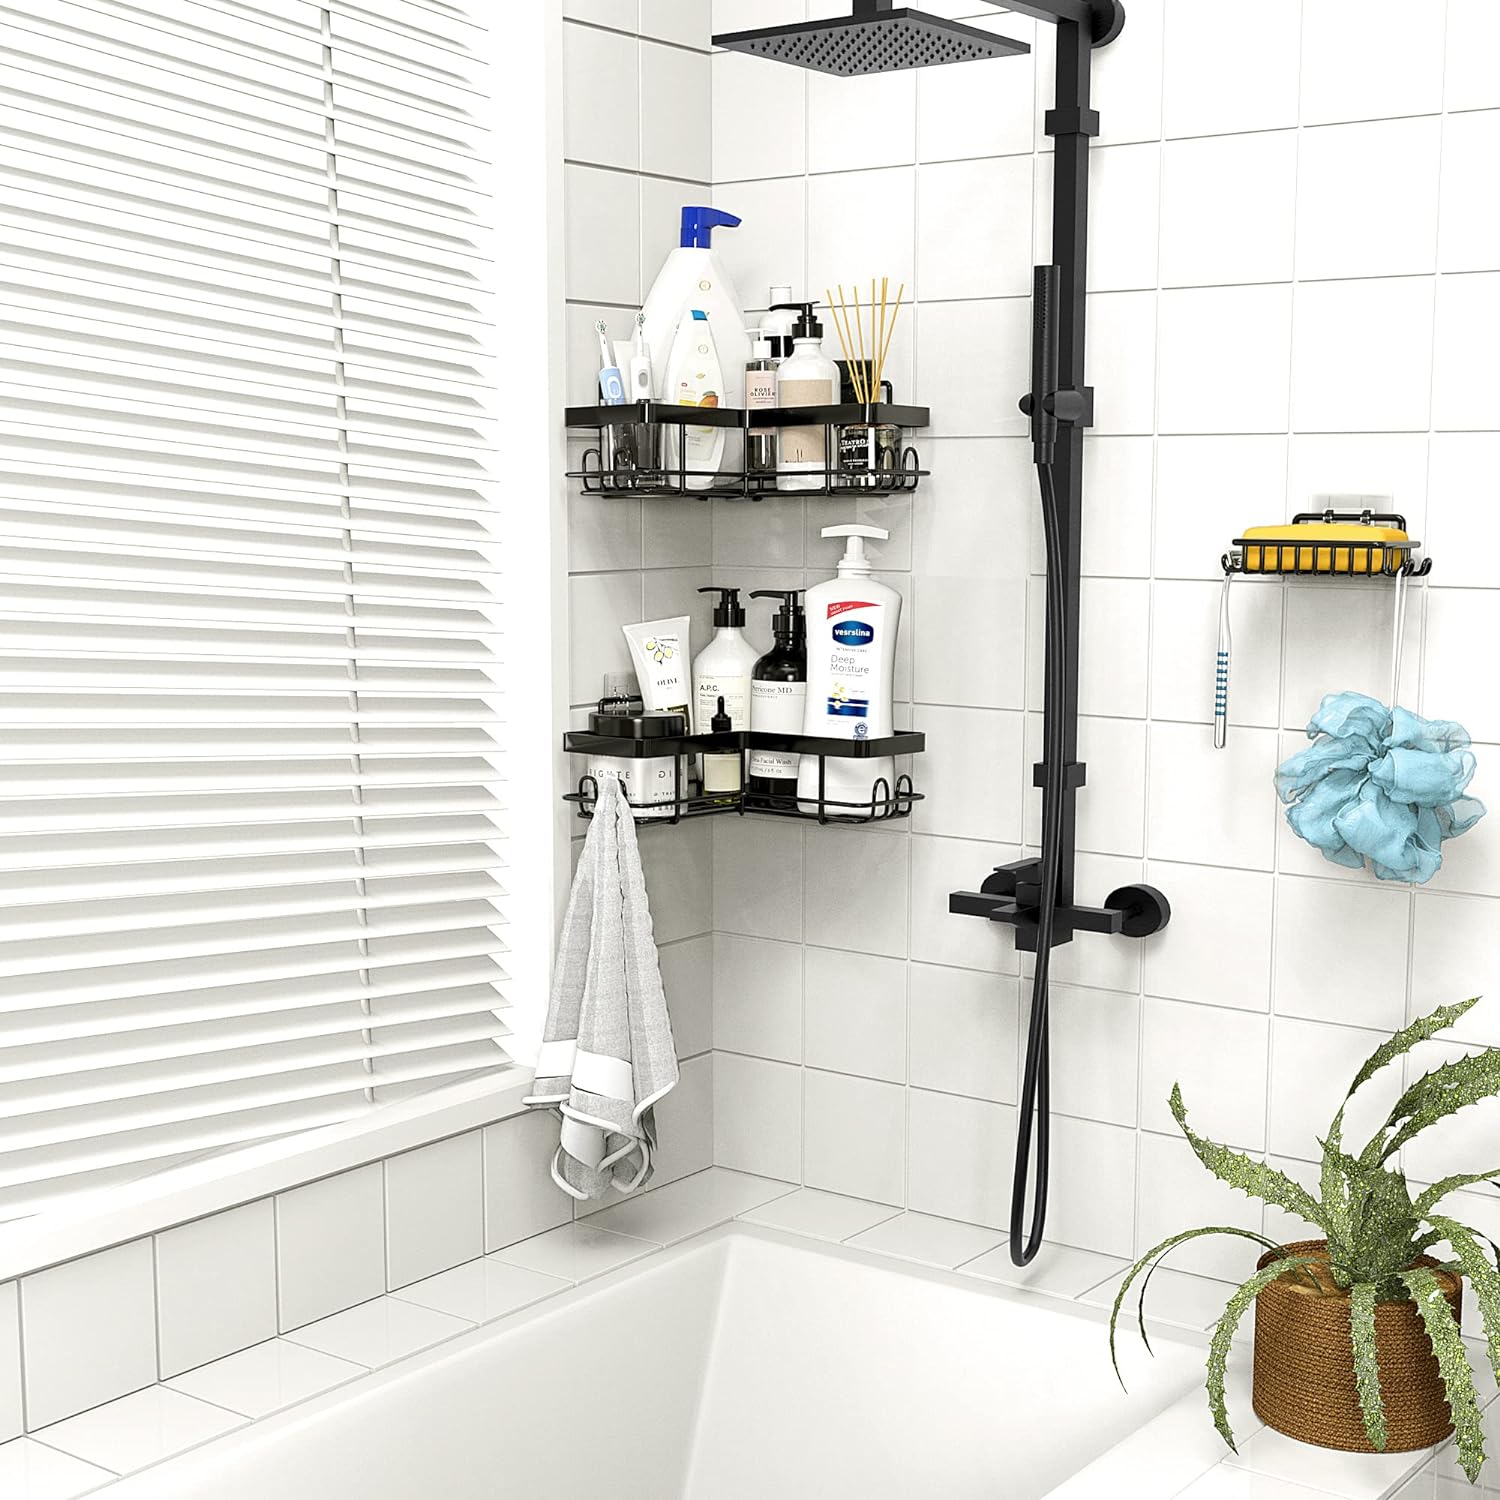 Set Of 5 Mesh Shower Shelves, Multipurpose Wall Storage Racks, Stainless Steel Bathroom Corner Baskets, Shower Basket for Hanging, Shampoo, Shower Gel, Soap Holder